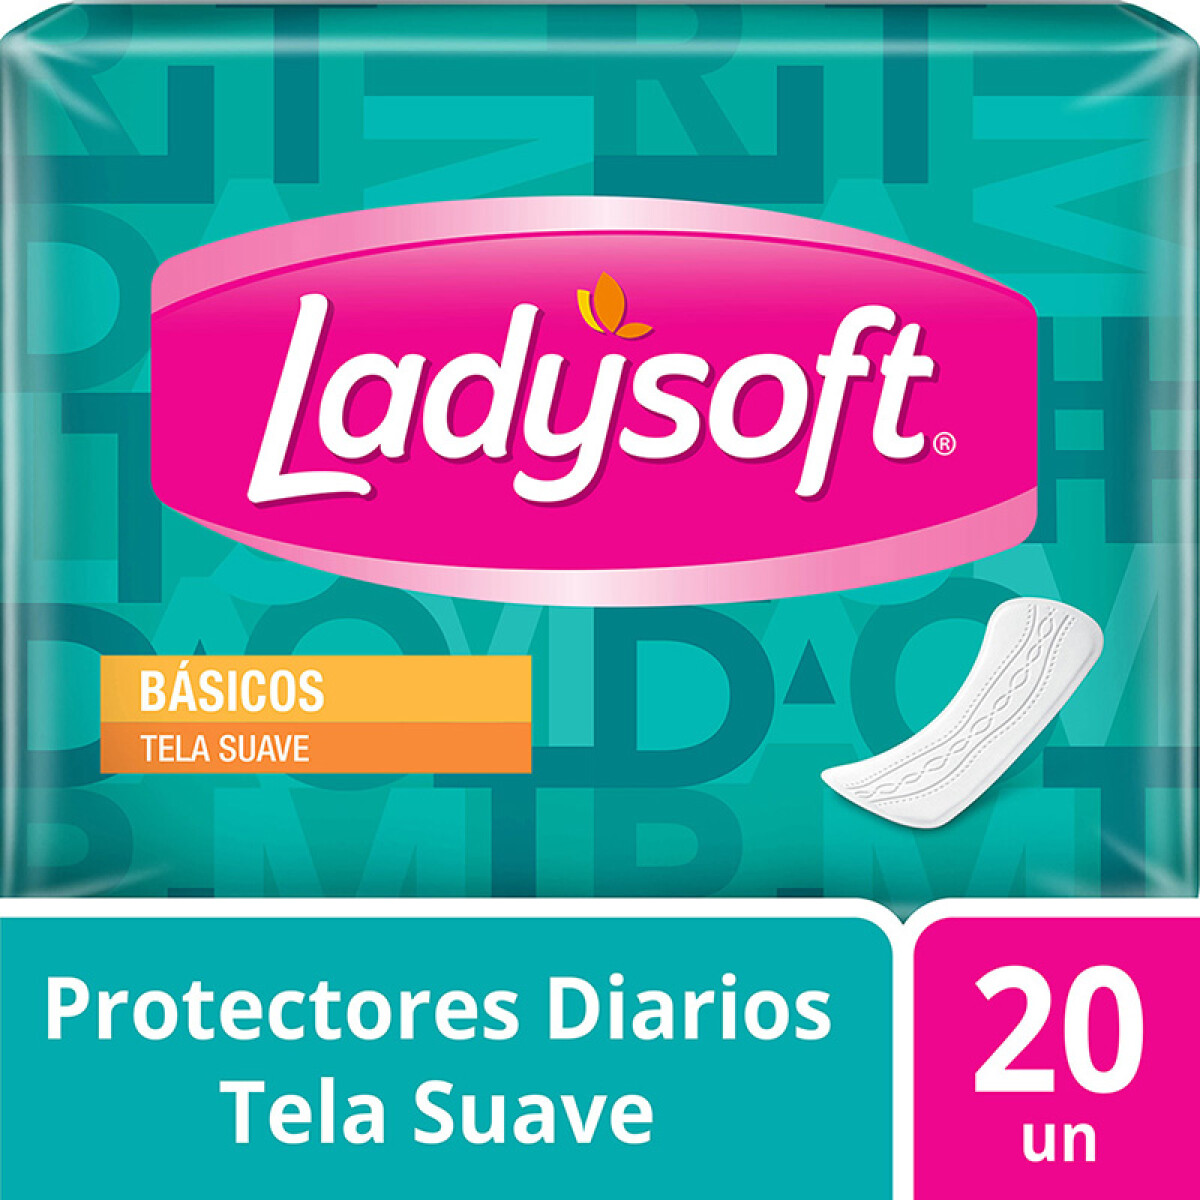 Ladysoft toalla - Protector clásico x20 